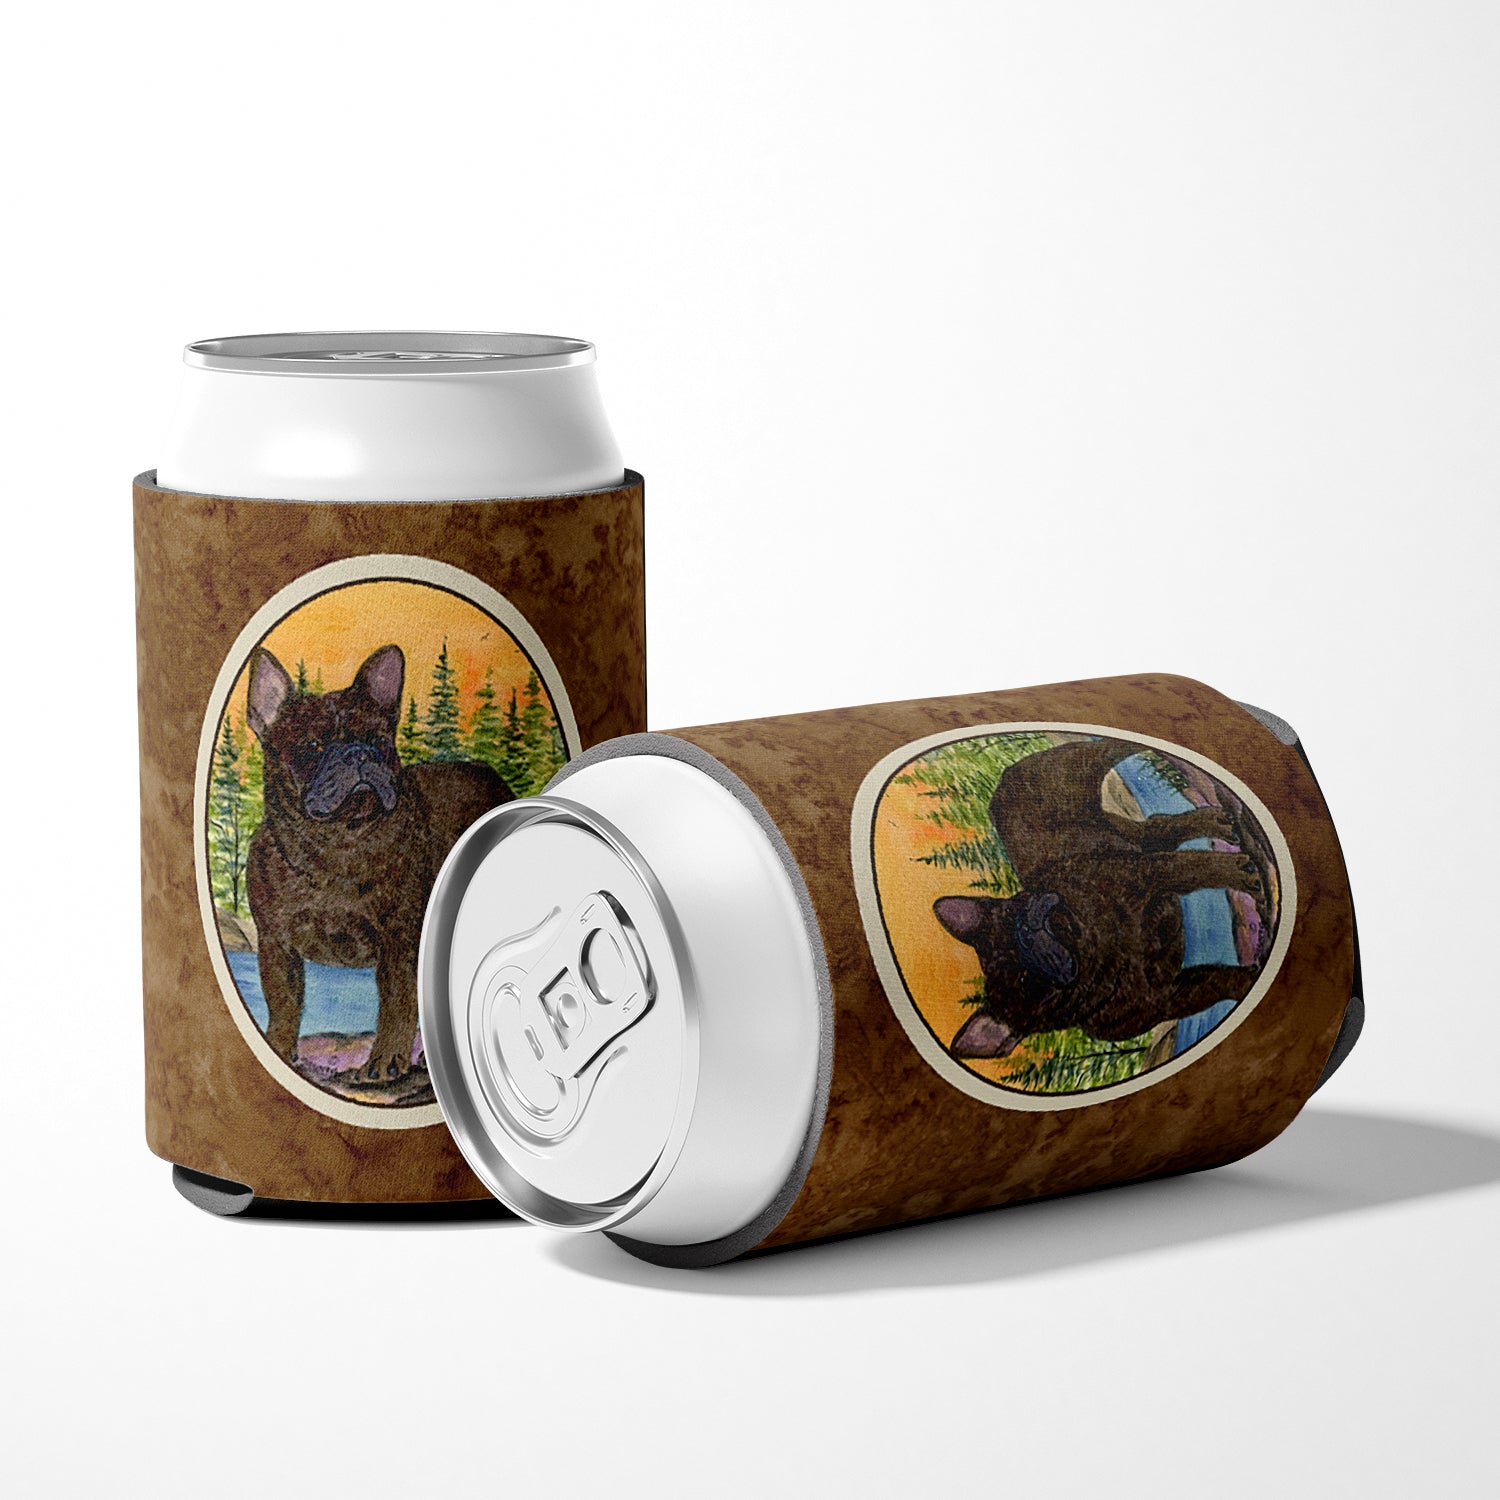 French Bulldog Can or Bottle Beverage Insulator Hugger